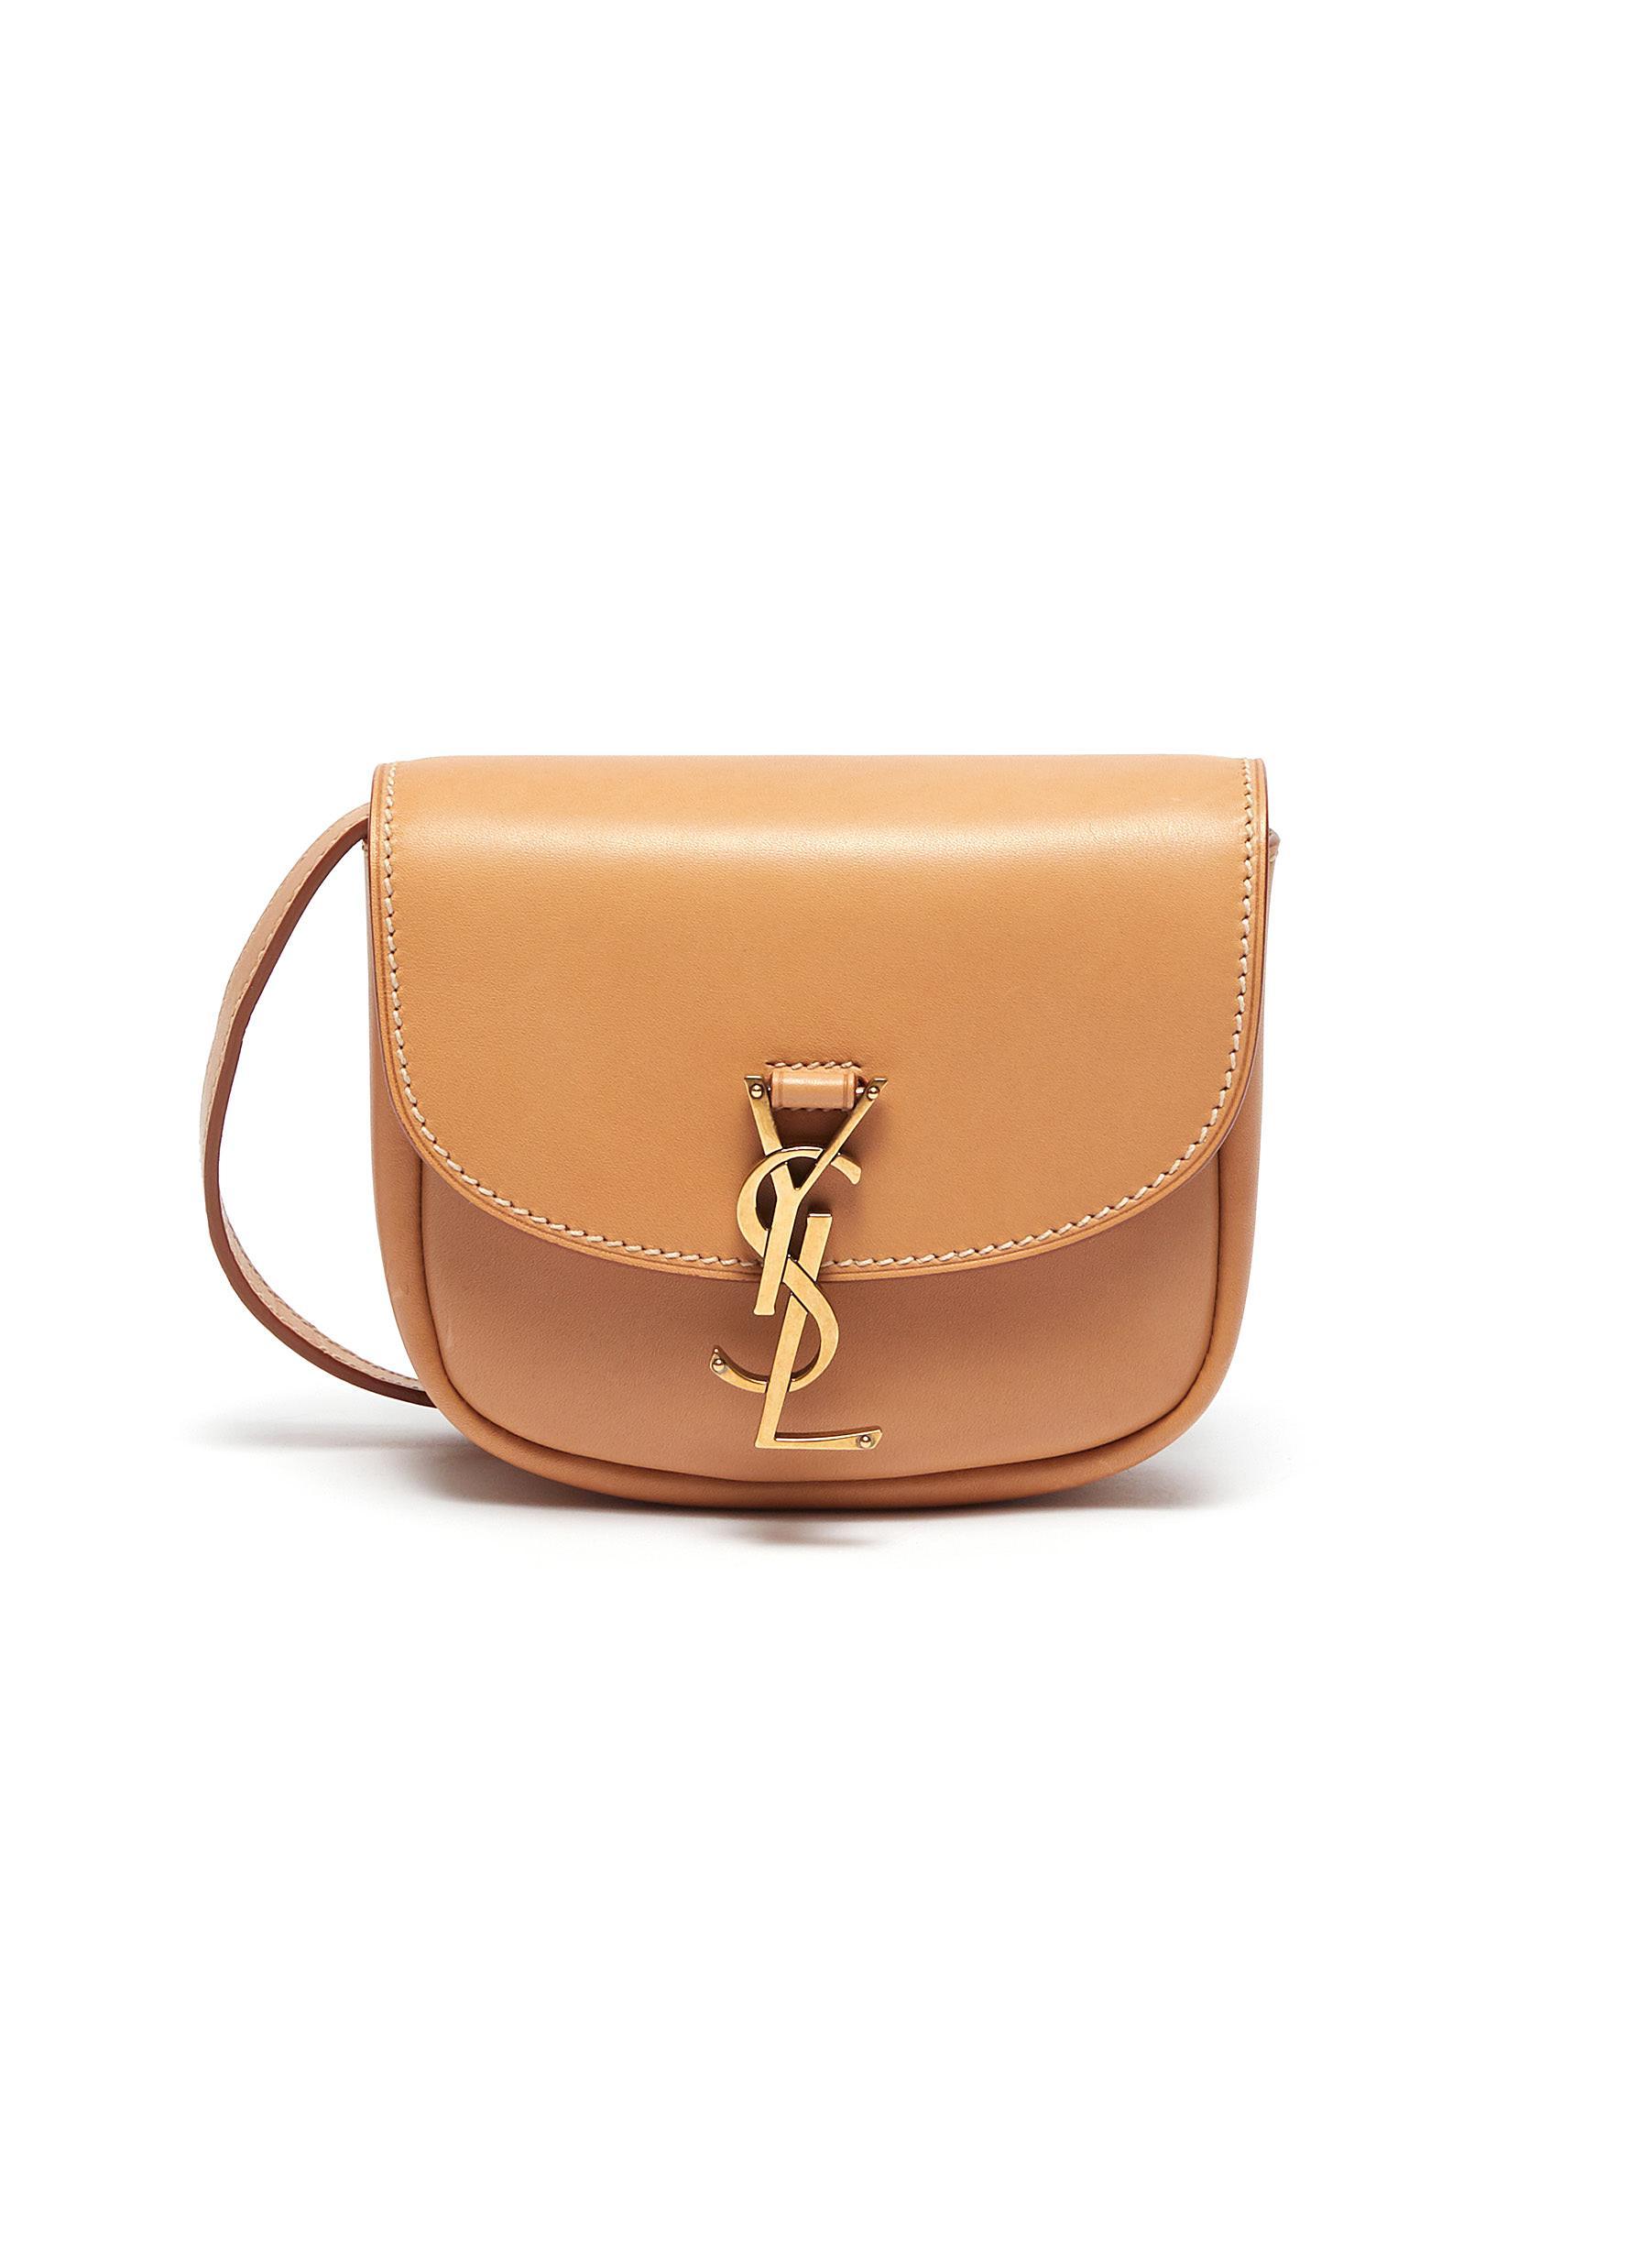 Saint Laurent Kaia' Calfskin Leather Mini Crossbody Bag in Brown | Lyst